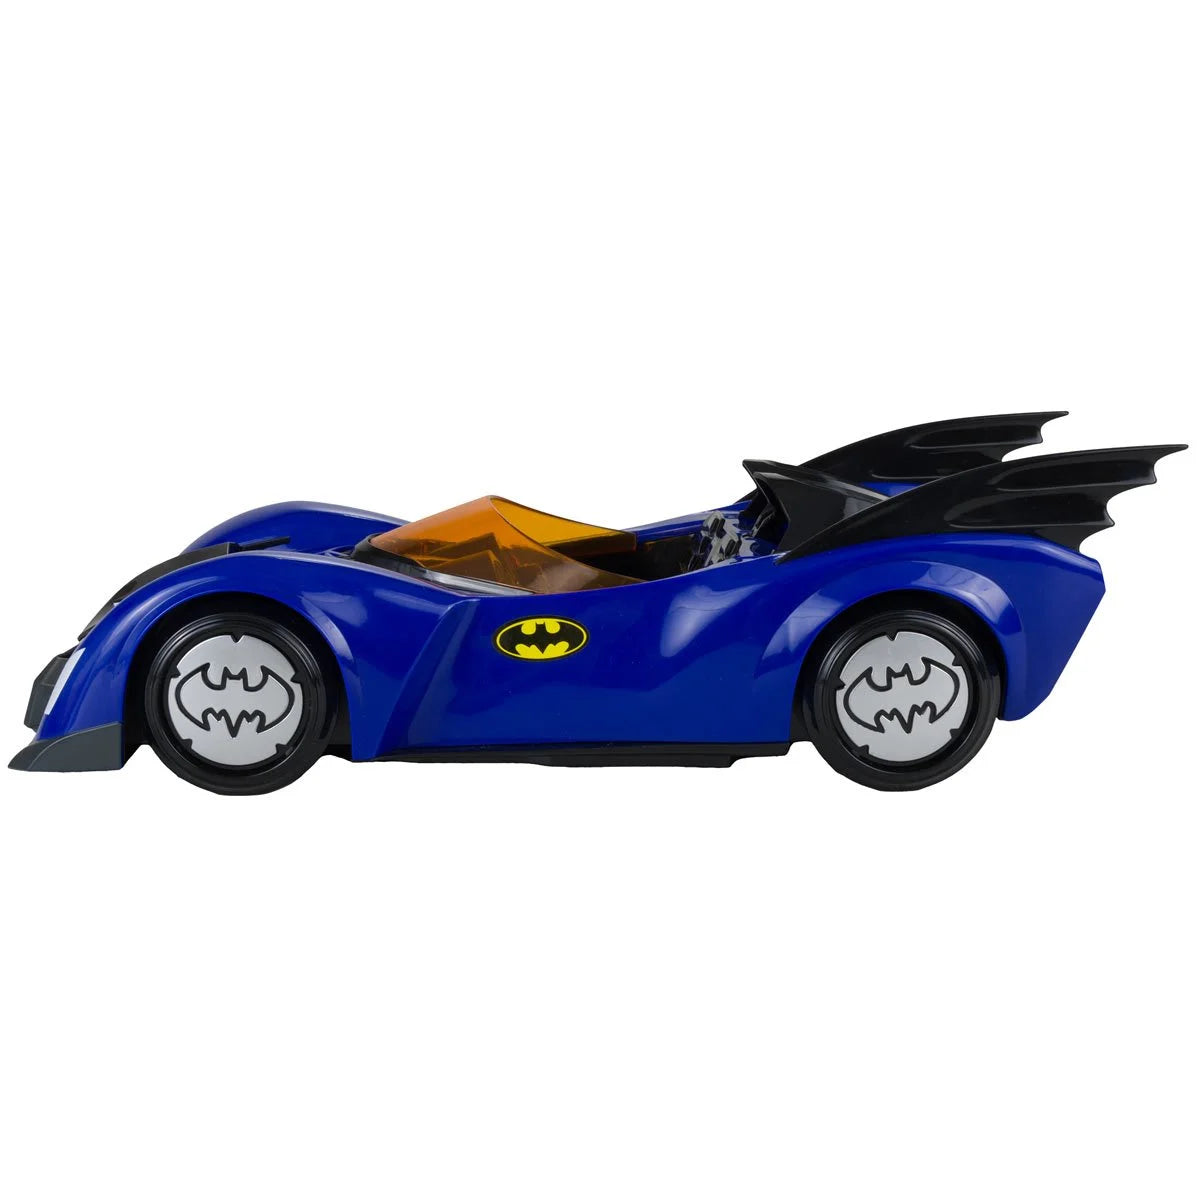 DC Super Powers The Batmobile Vehicle - Heretoserveyou